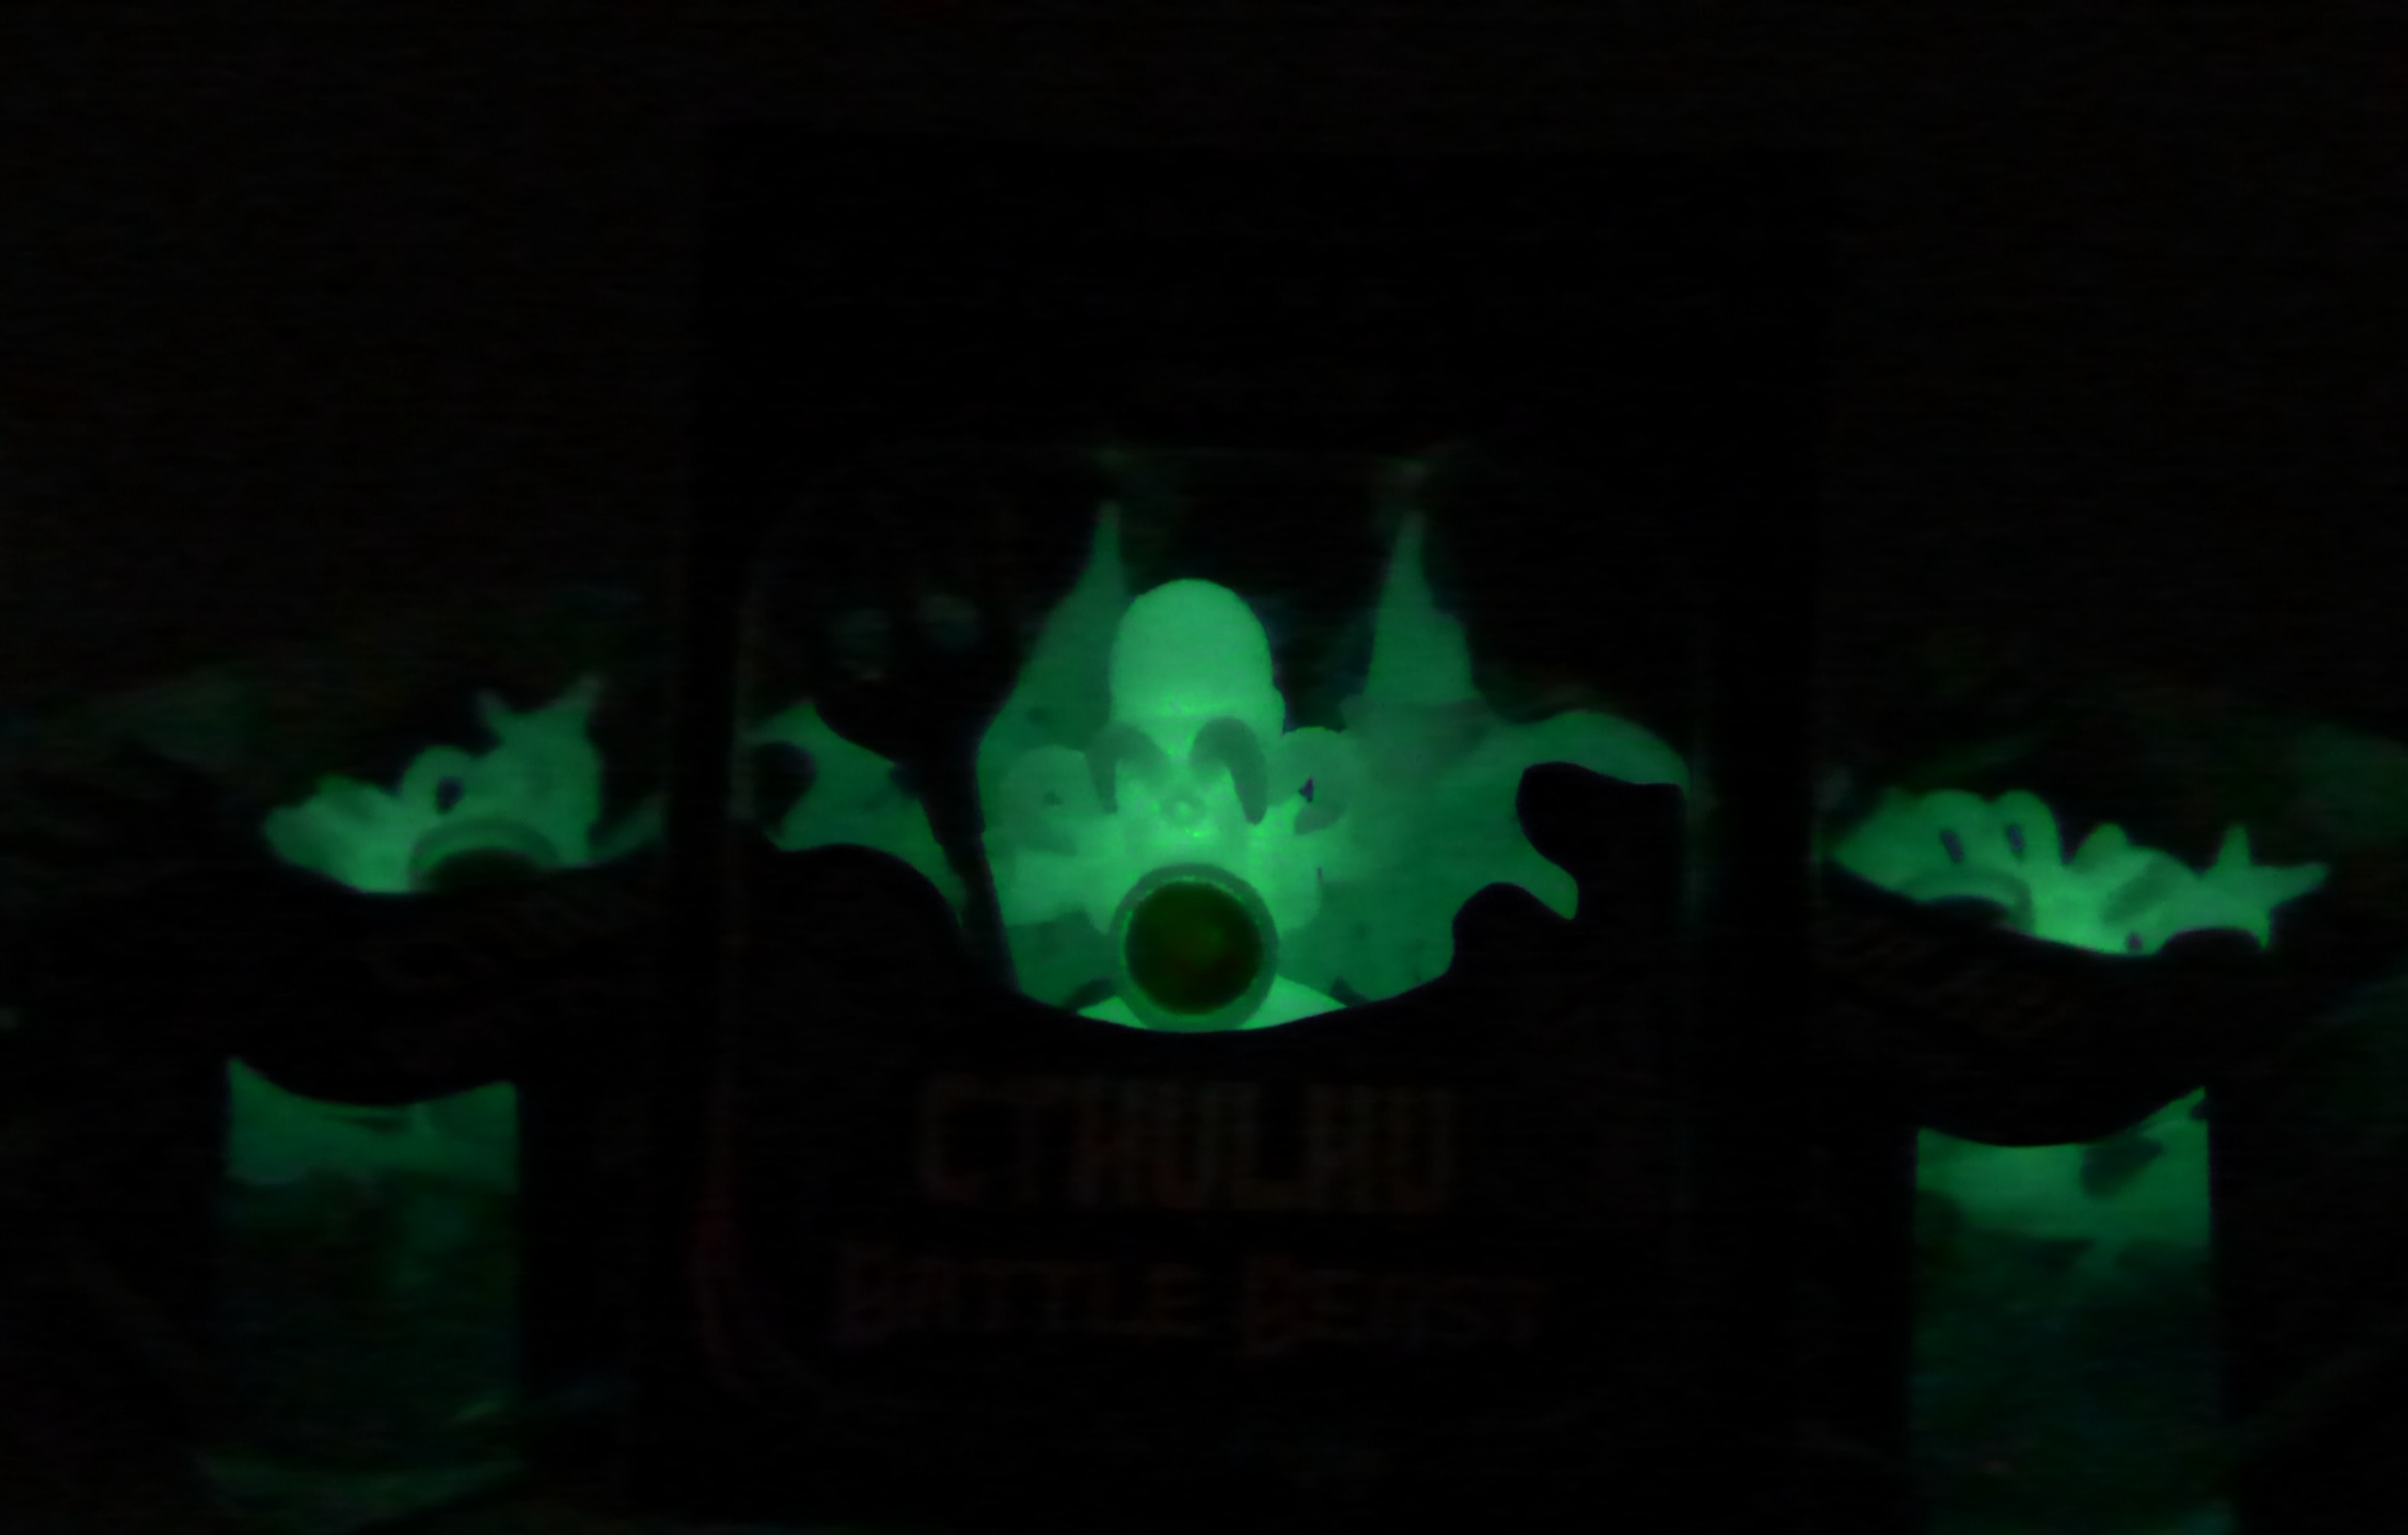 Cthulhu glowing in the dark